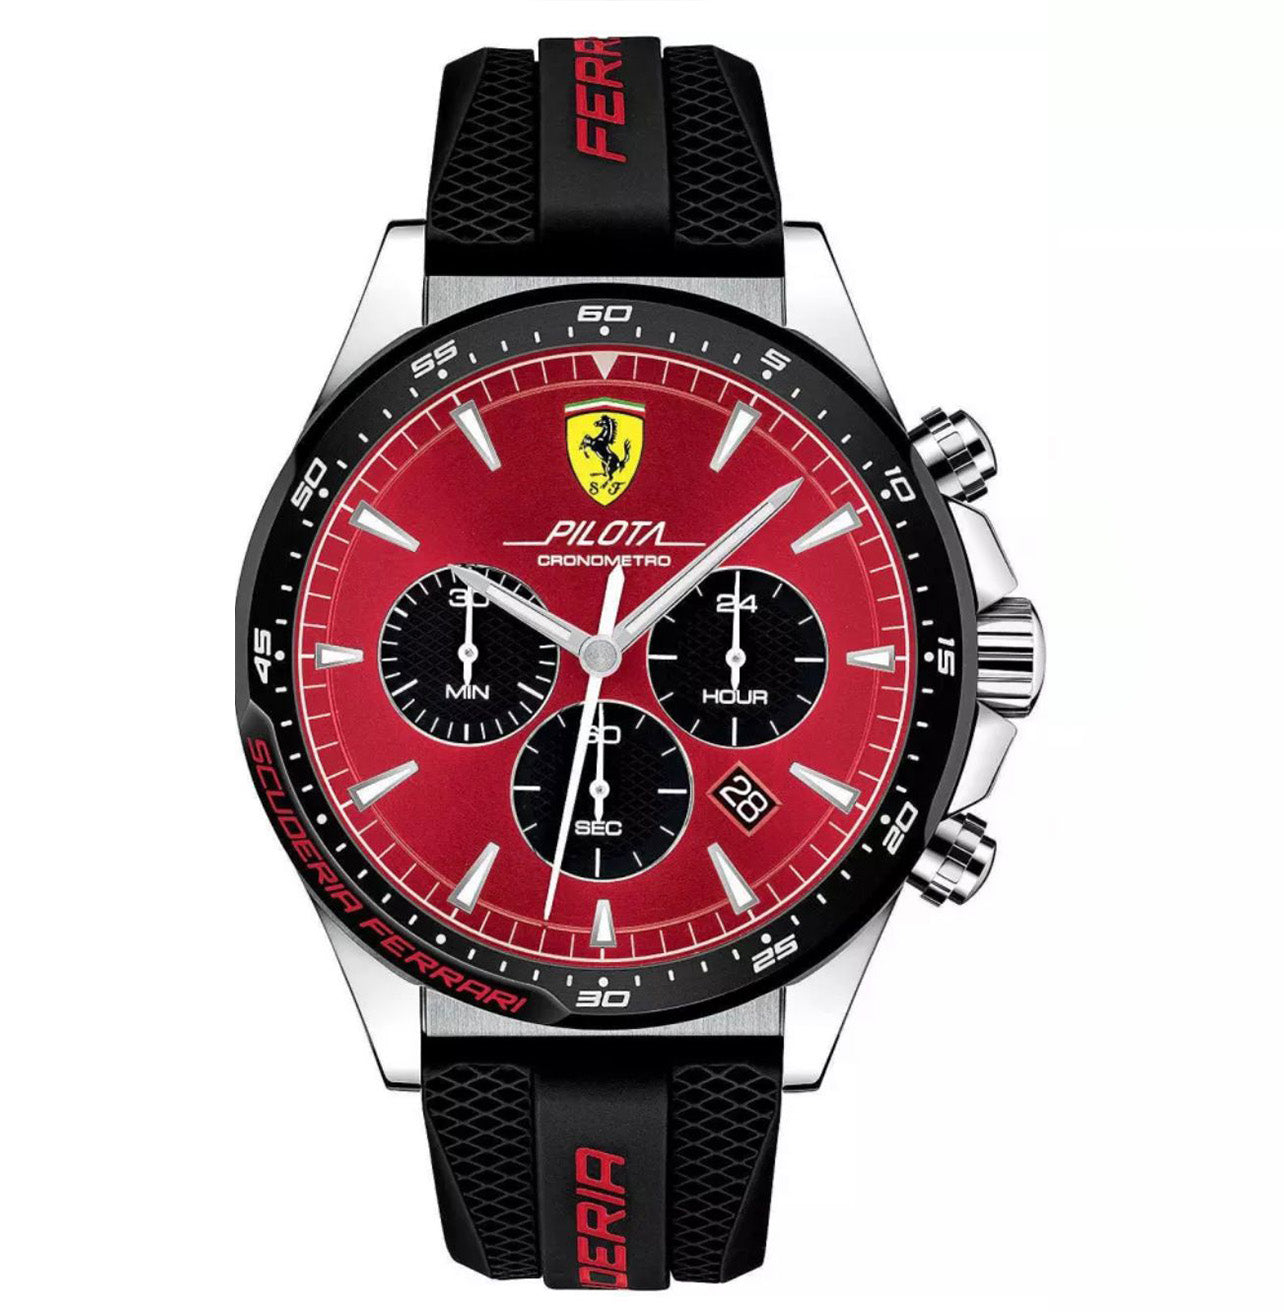 Orologio Ferrari Pilota - Gioielleri Iarlori